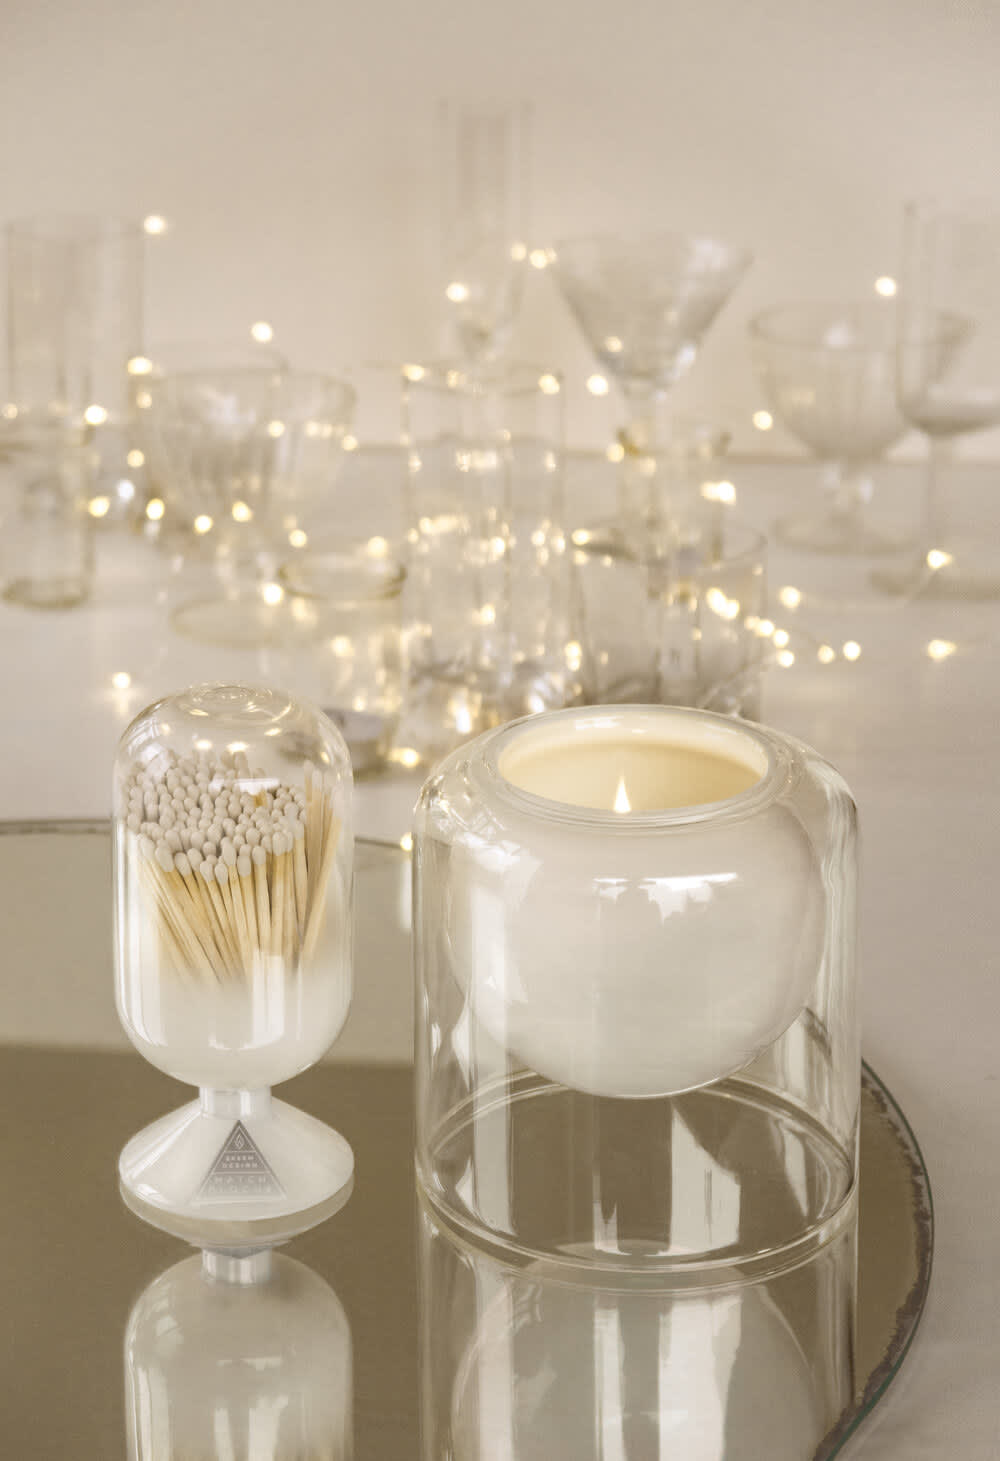 Helix Match Cloche-White | Skeem Design | Iris Gifts & Décor